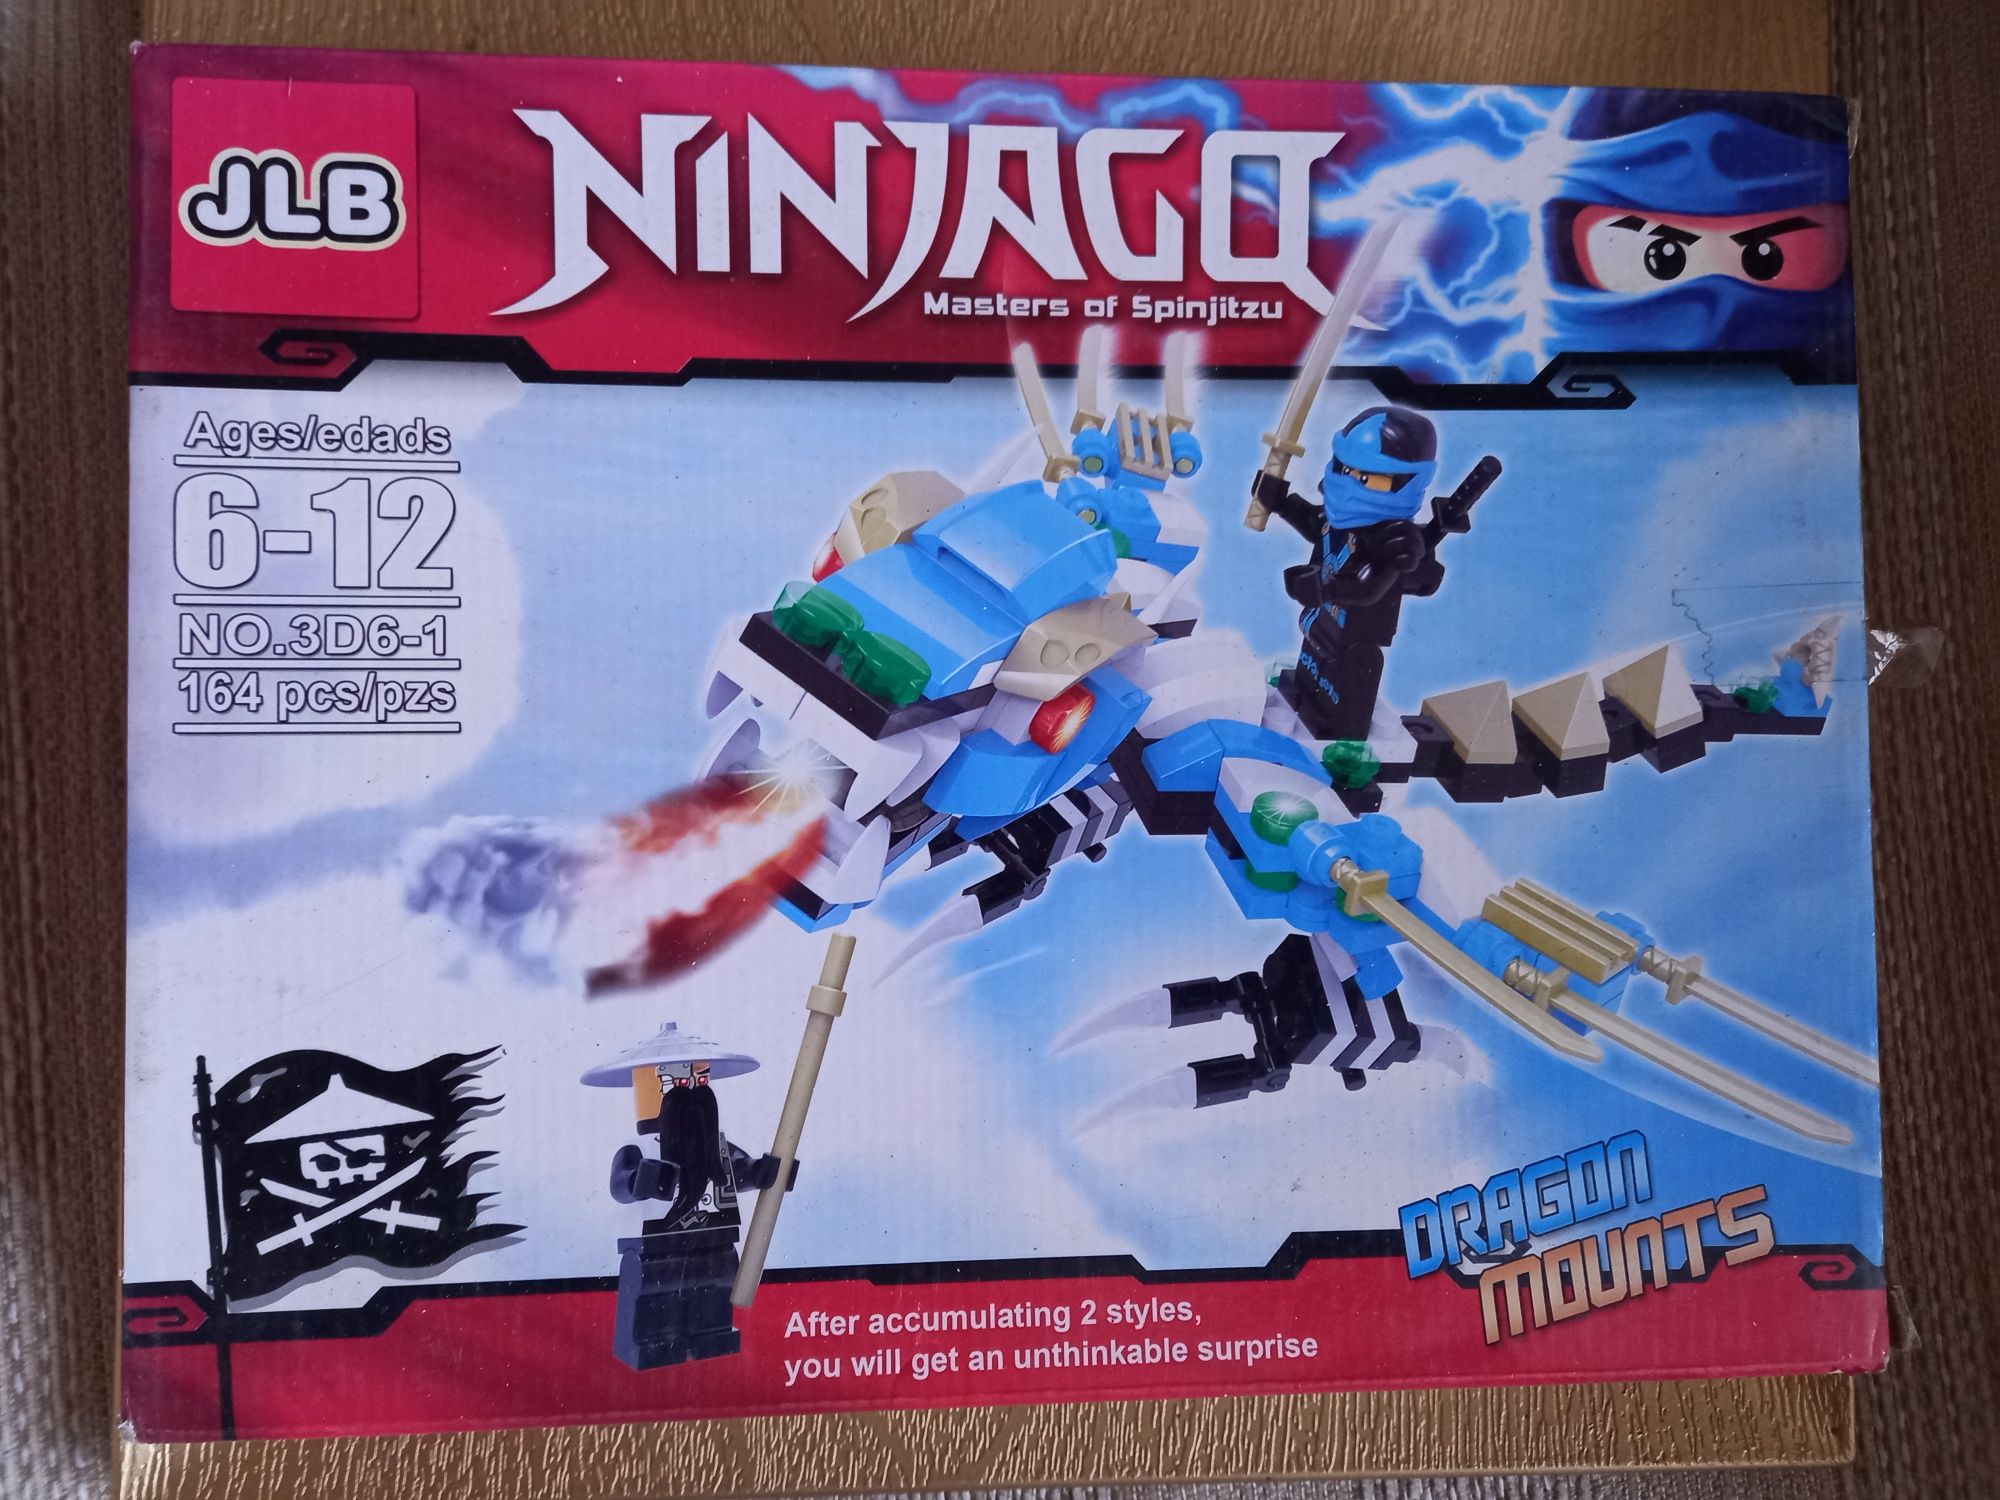 Лего нинджаго ninjago star wars  minions